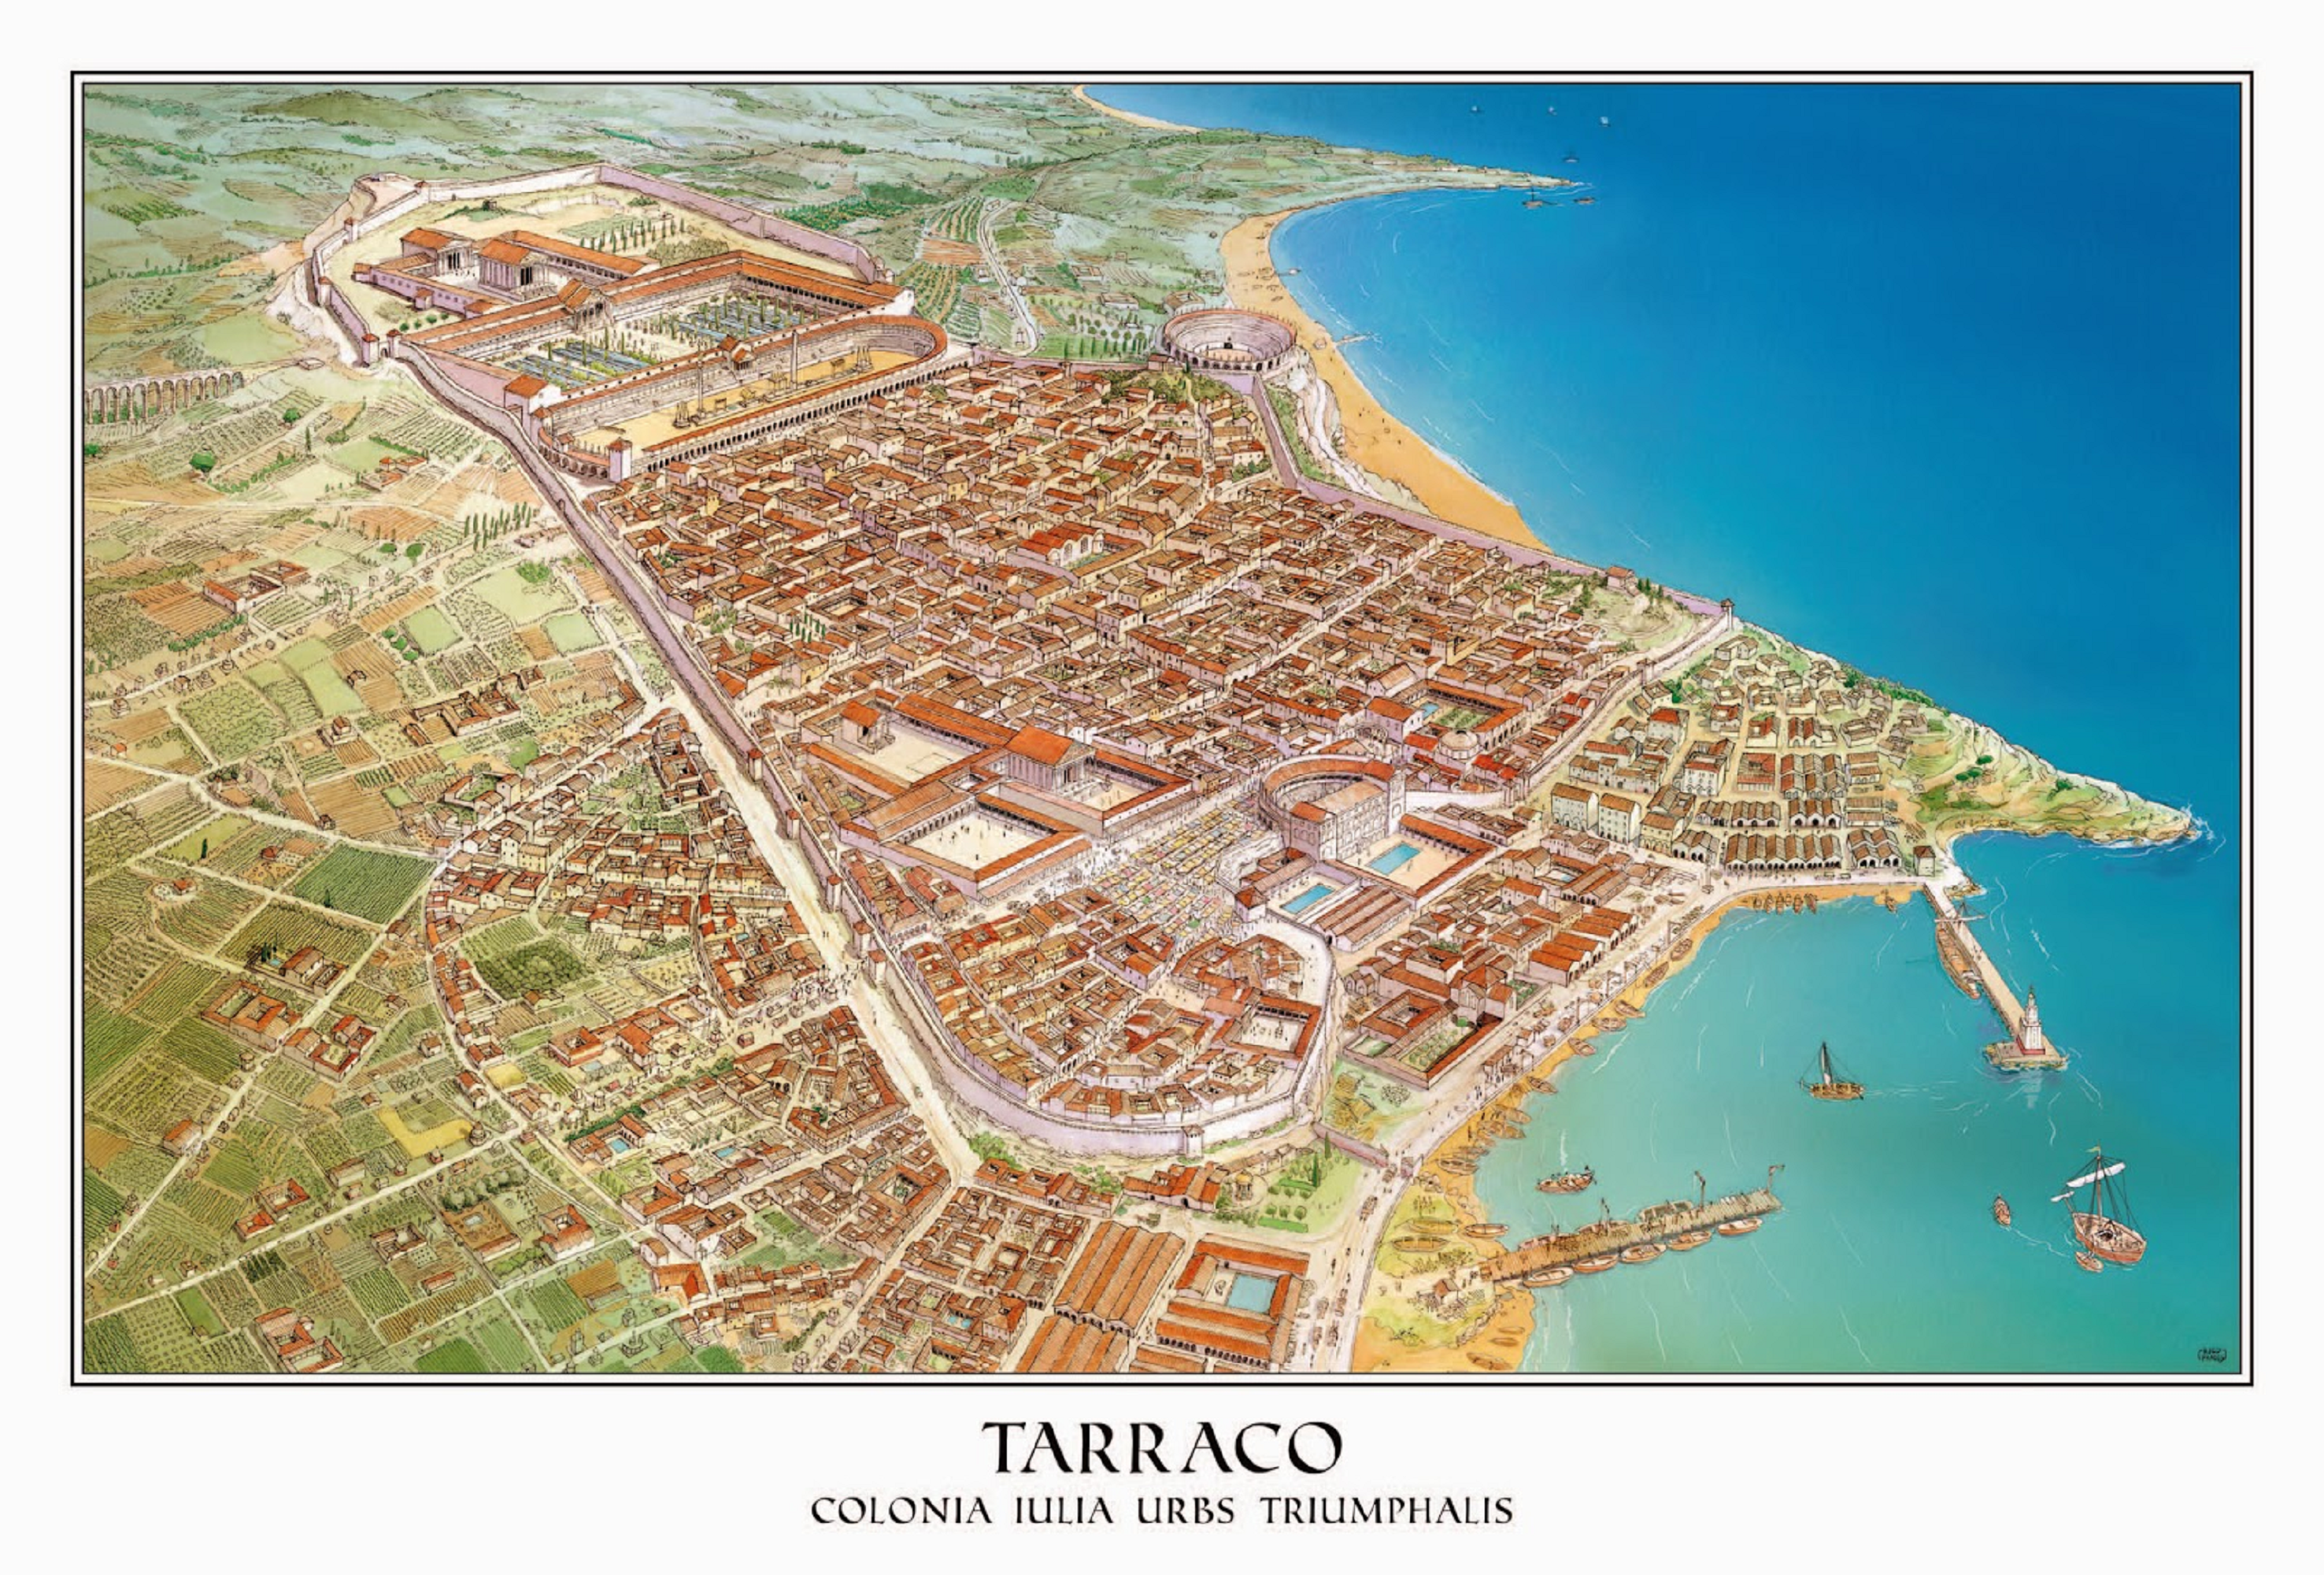 Nace Livia, que quería convertir Tarraco en la capital del Imperio